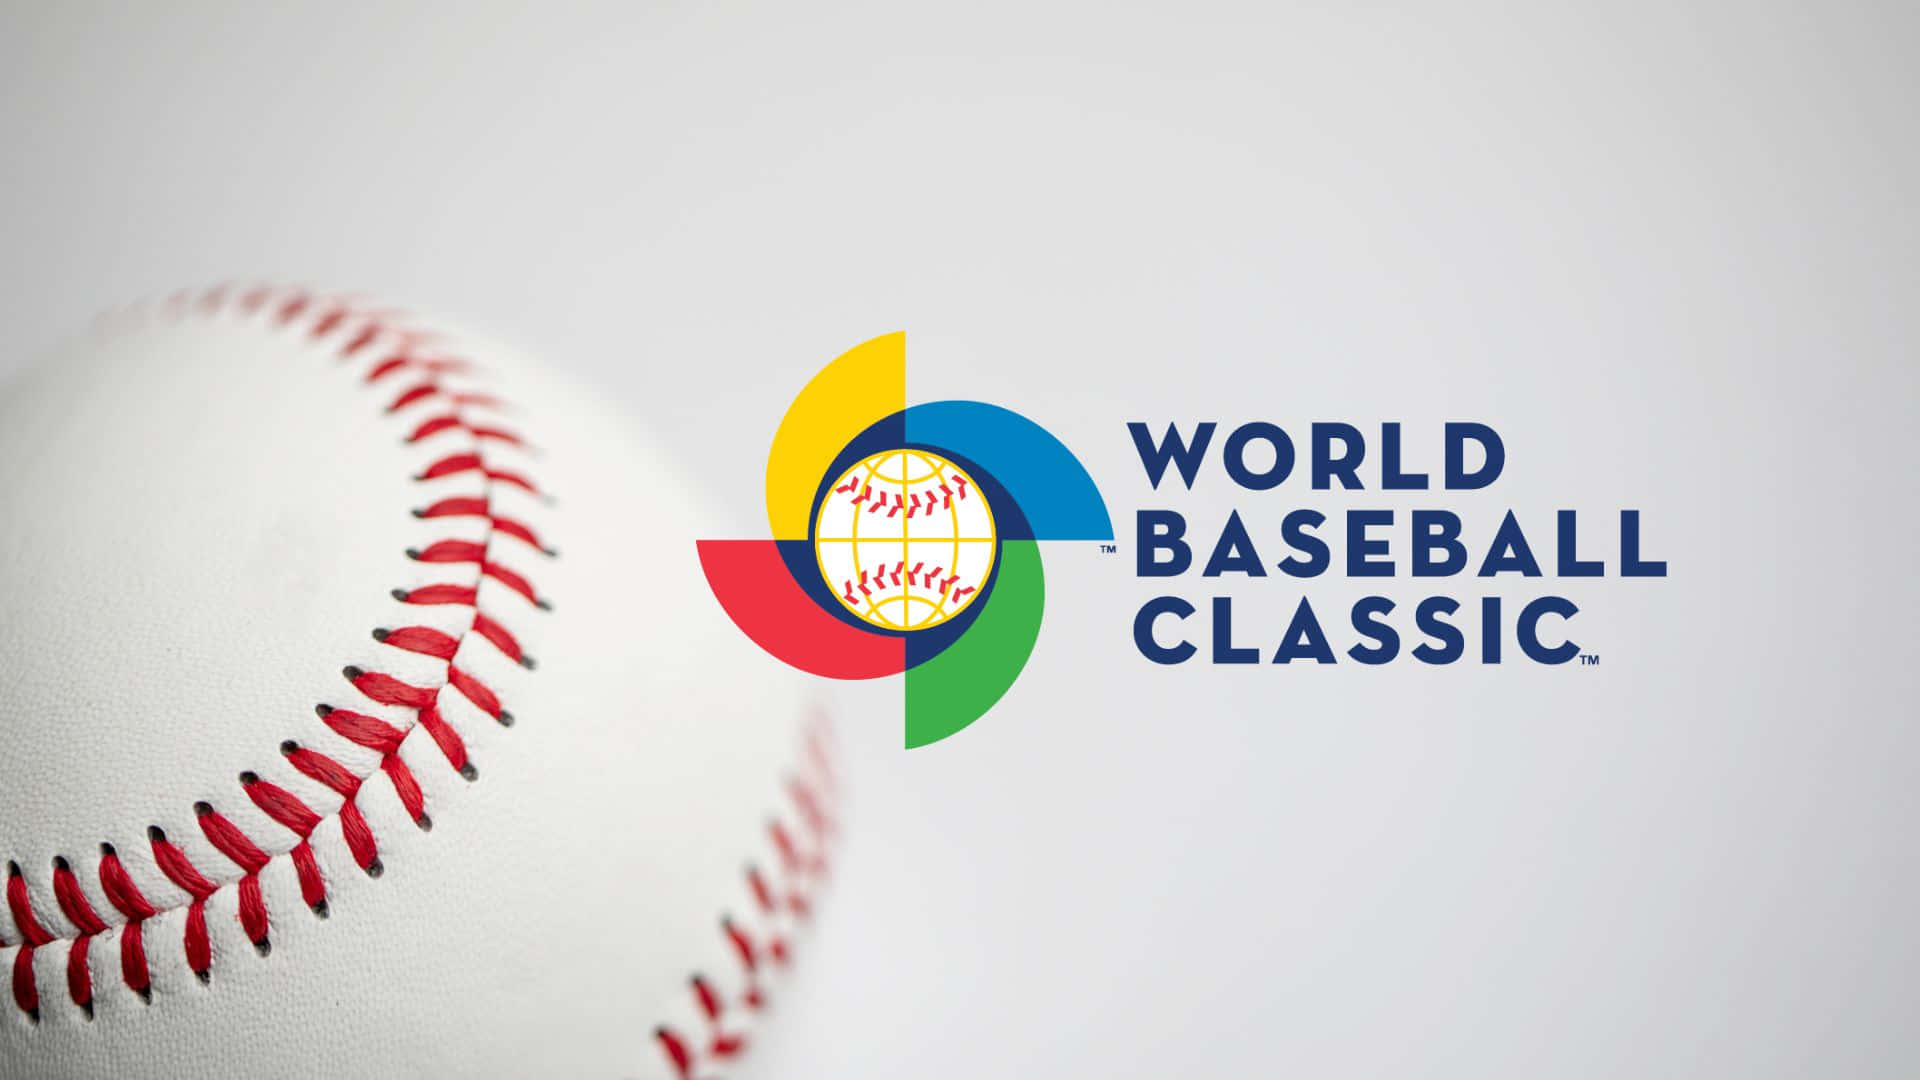 Download World Baseball Classic Wallpaper | Wallpapers.com